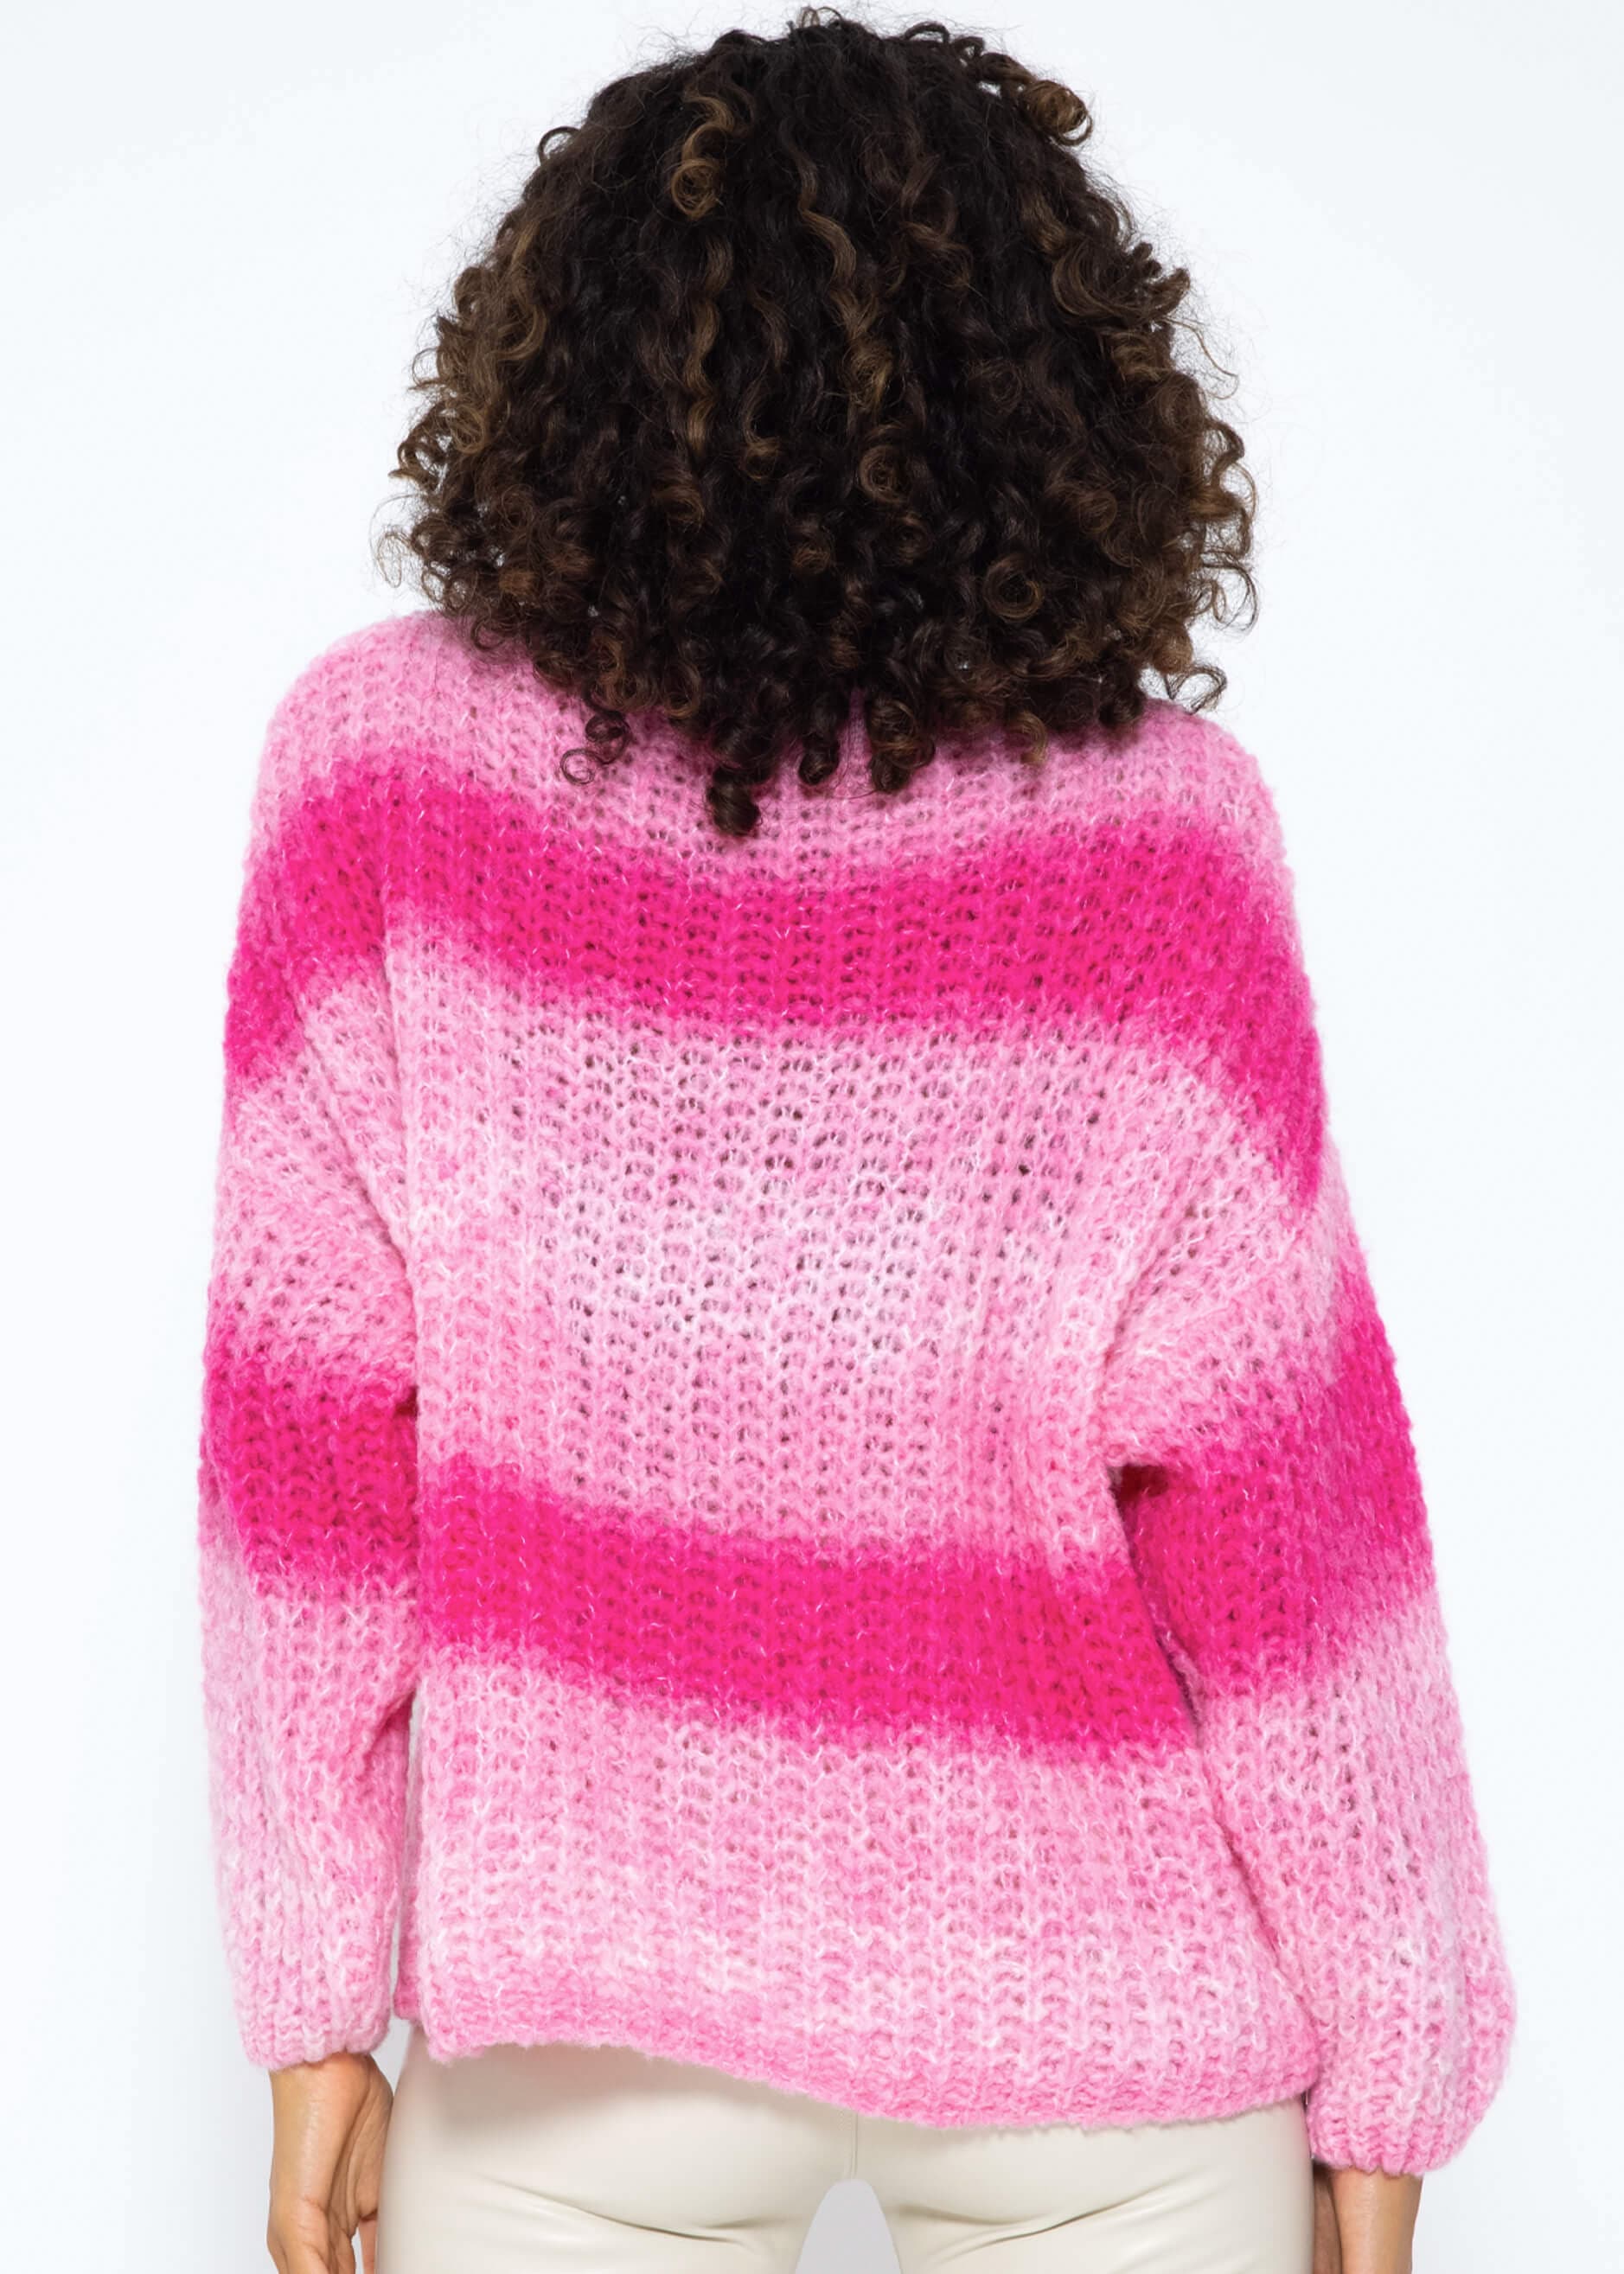 Pullover Farbverlauf SASSYCLASSY Strickpullover mit - rosa | Bekleidung | |